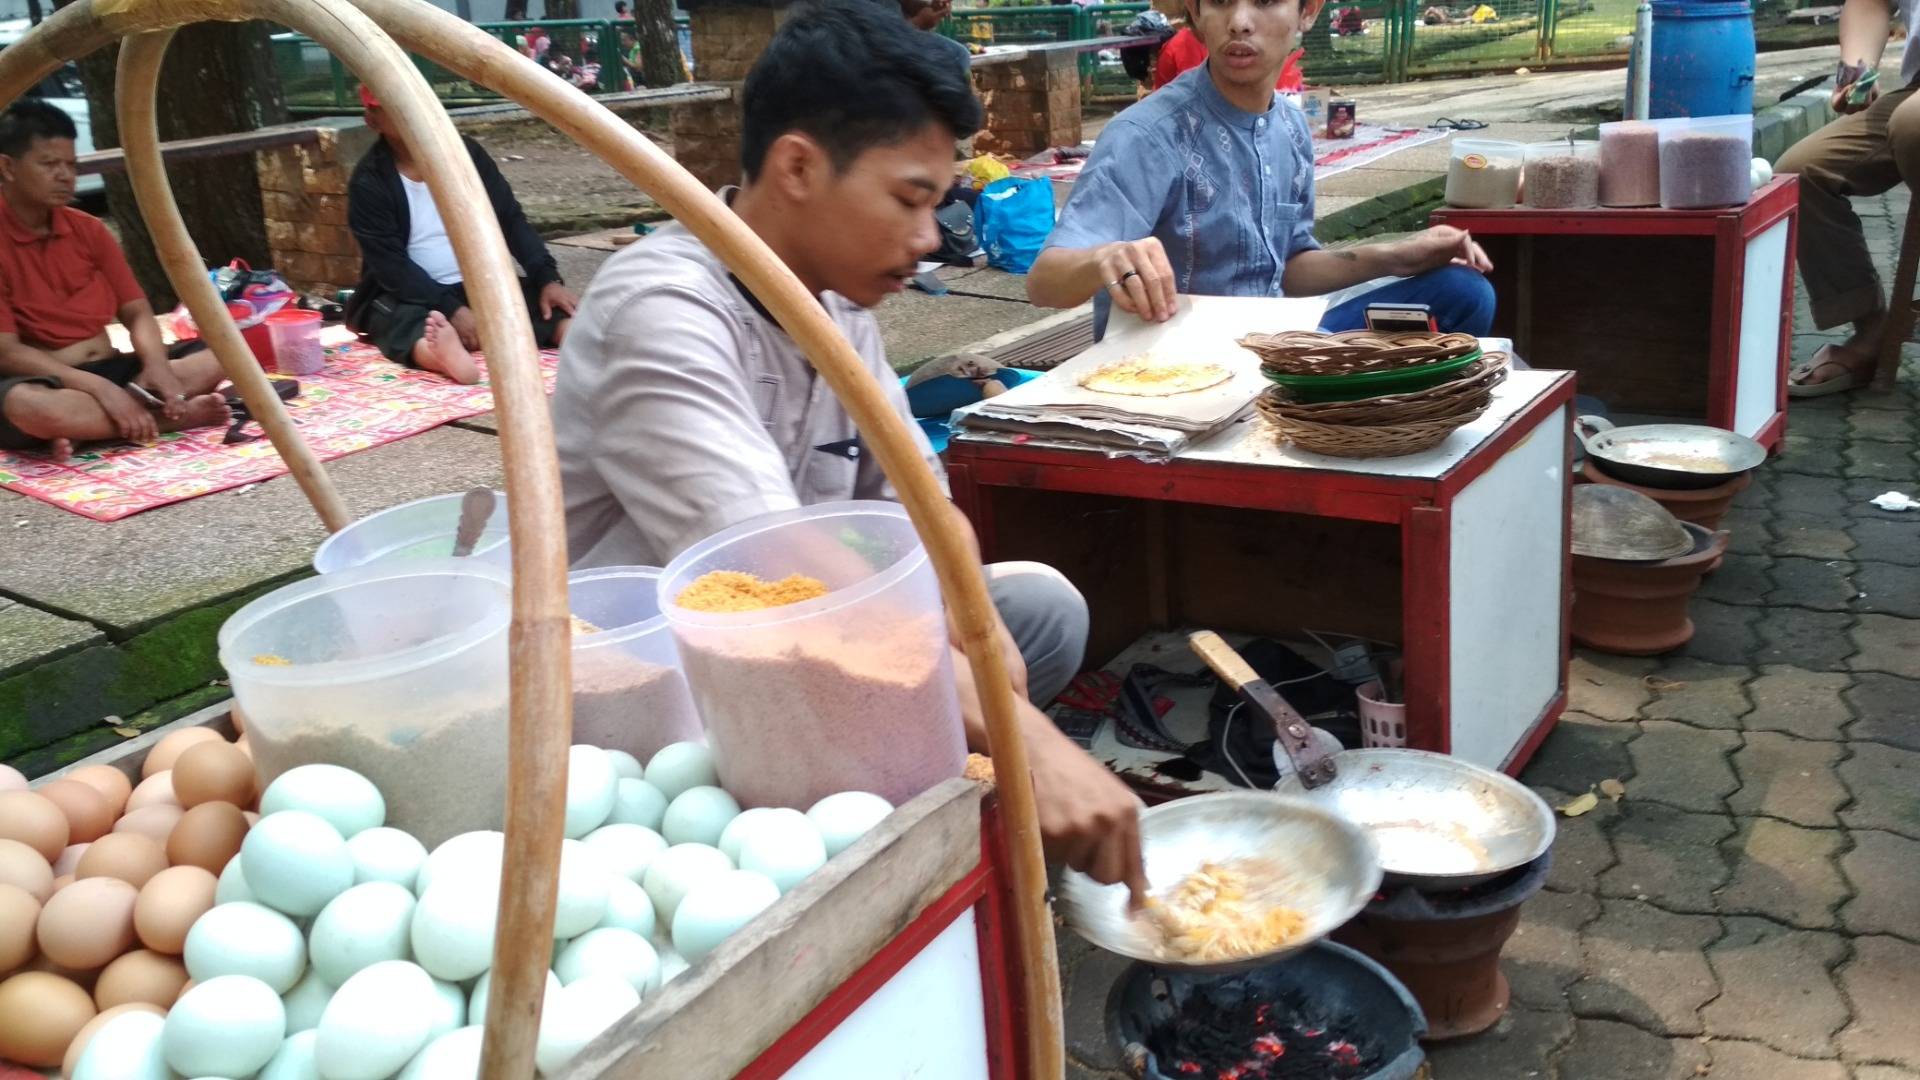 egg crust, a Jakarta specialty food